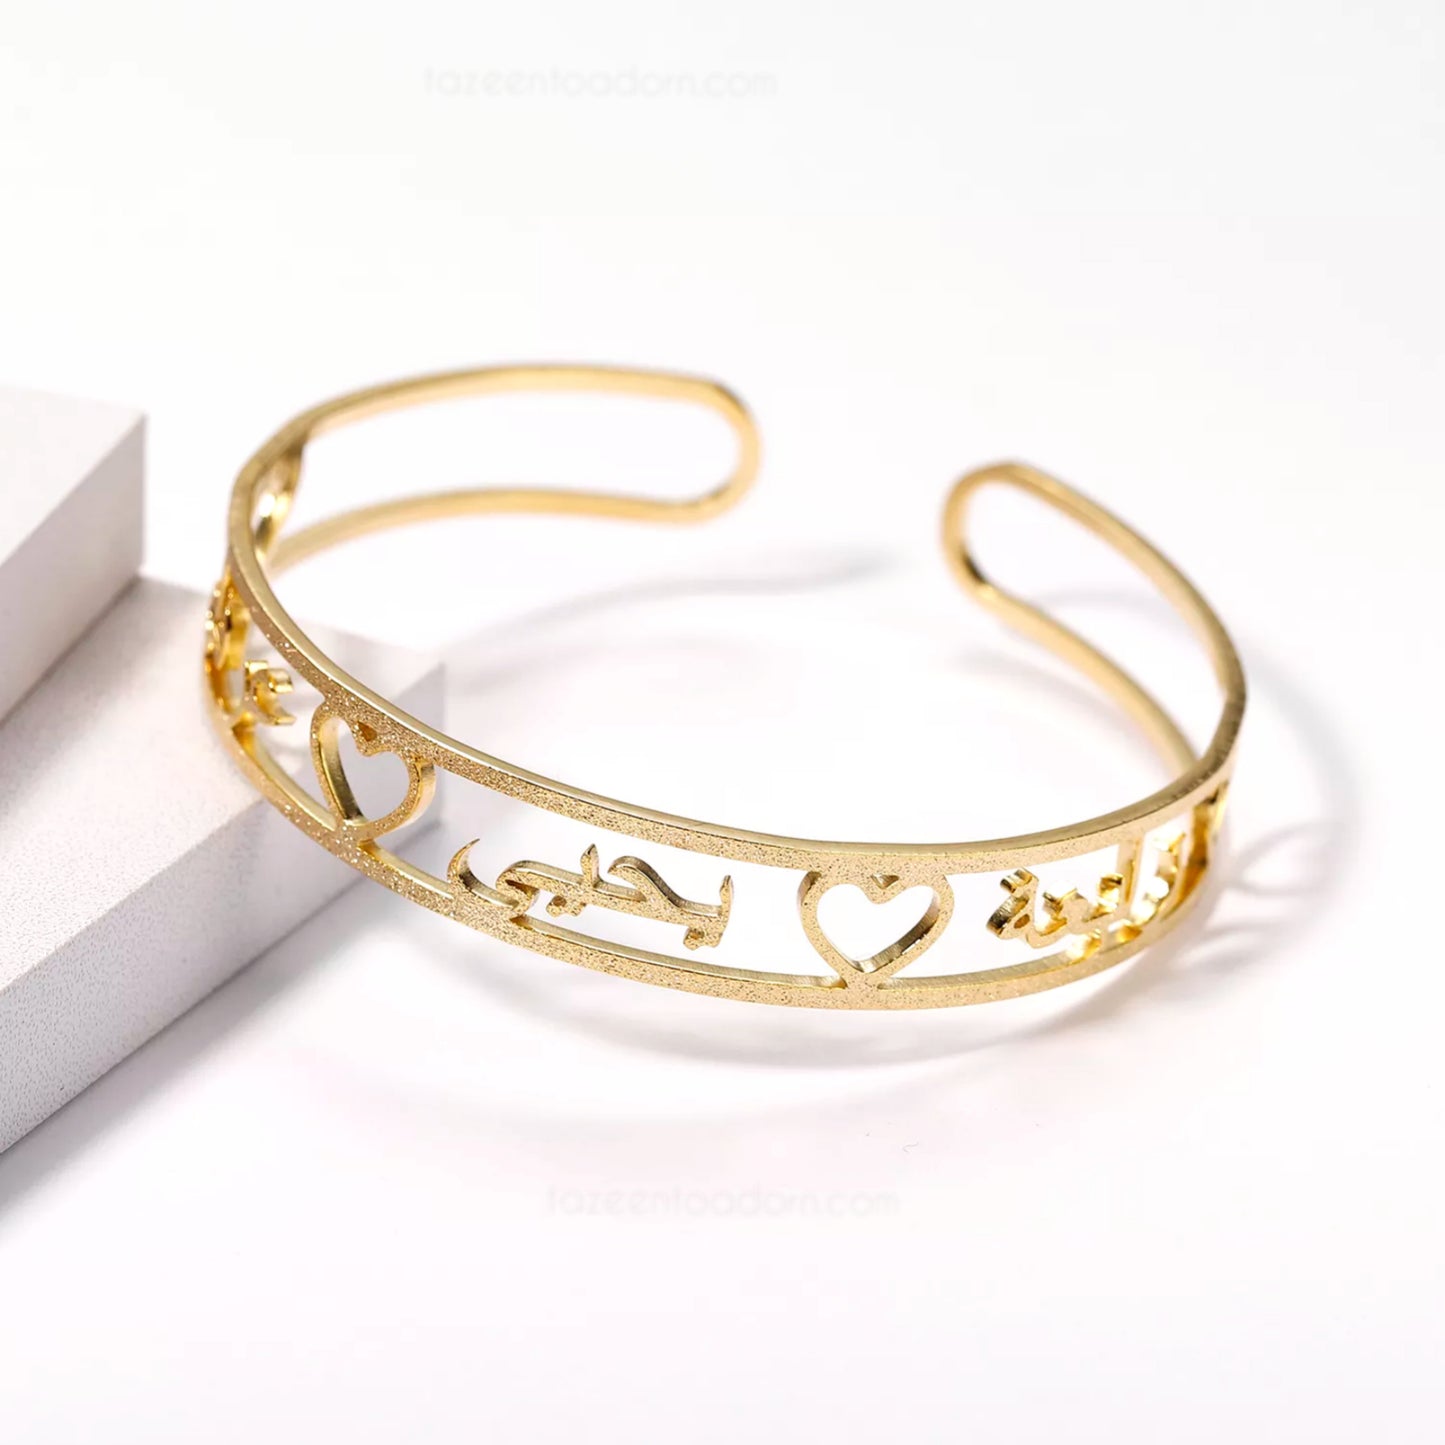 Single, Double or Family Name Bangle -  Custom Handmade Shimmery Pleasures Jewellery Gift (Arabic / English) - SADIA